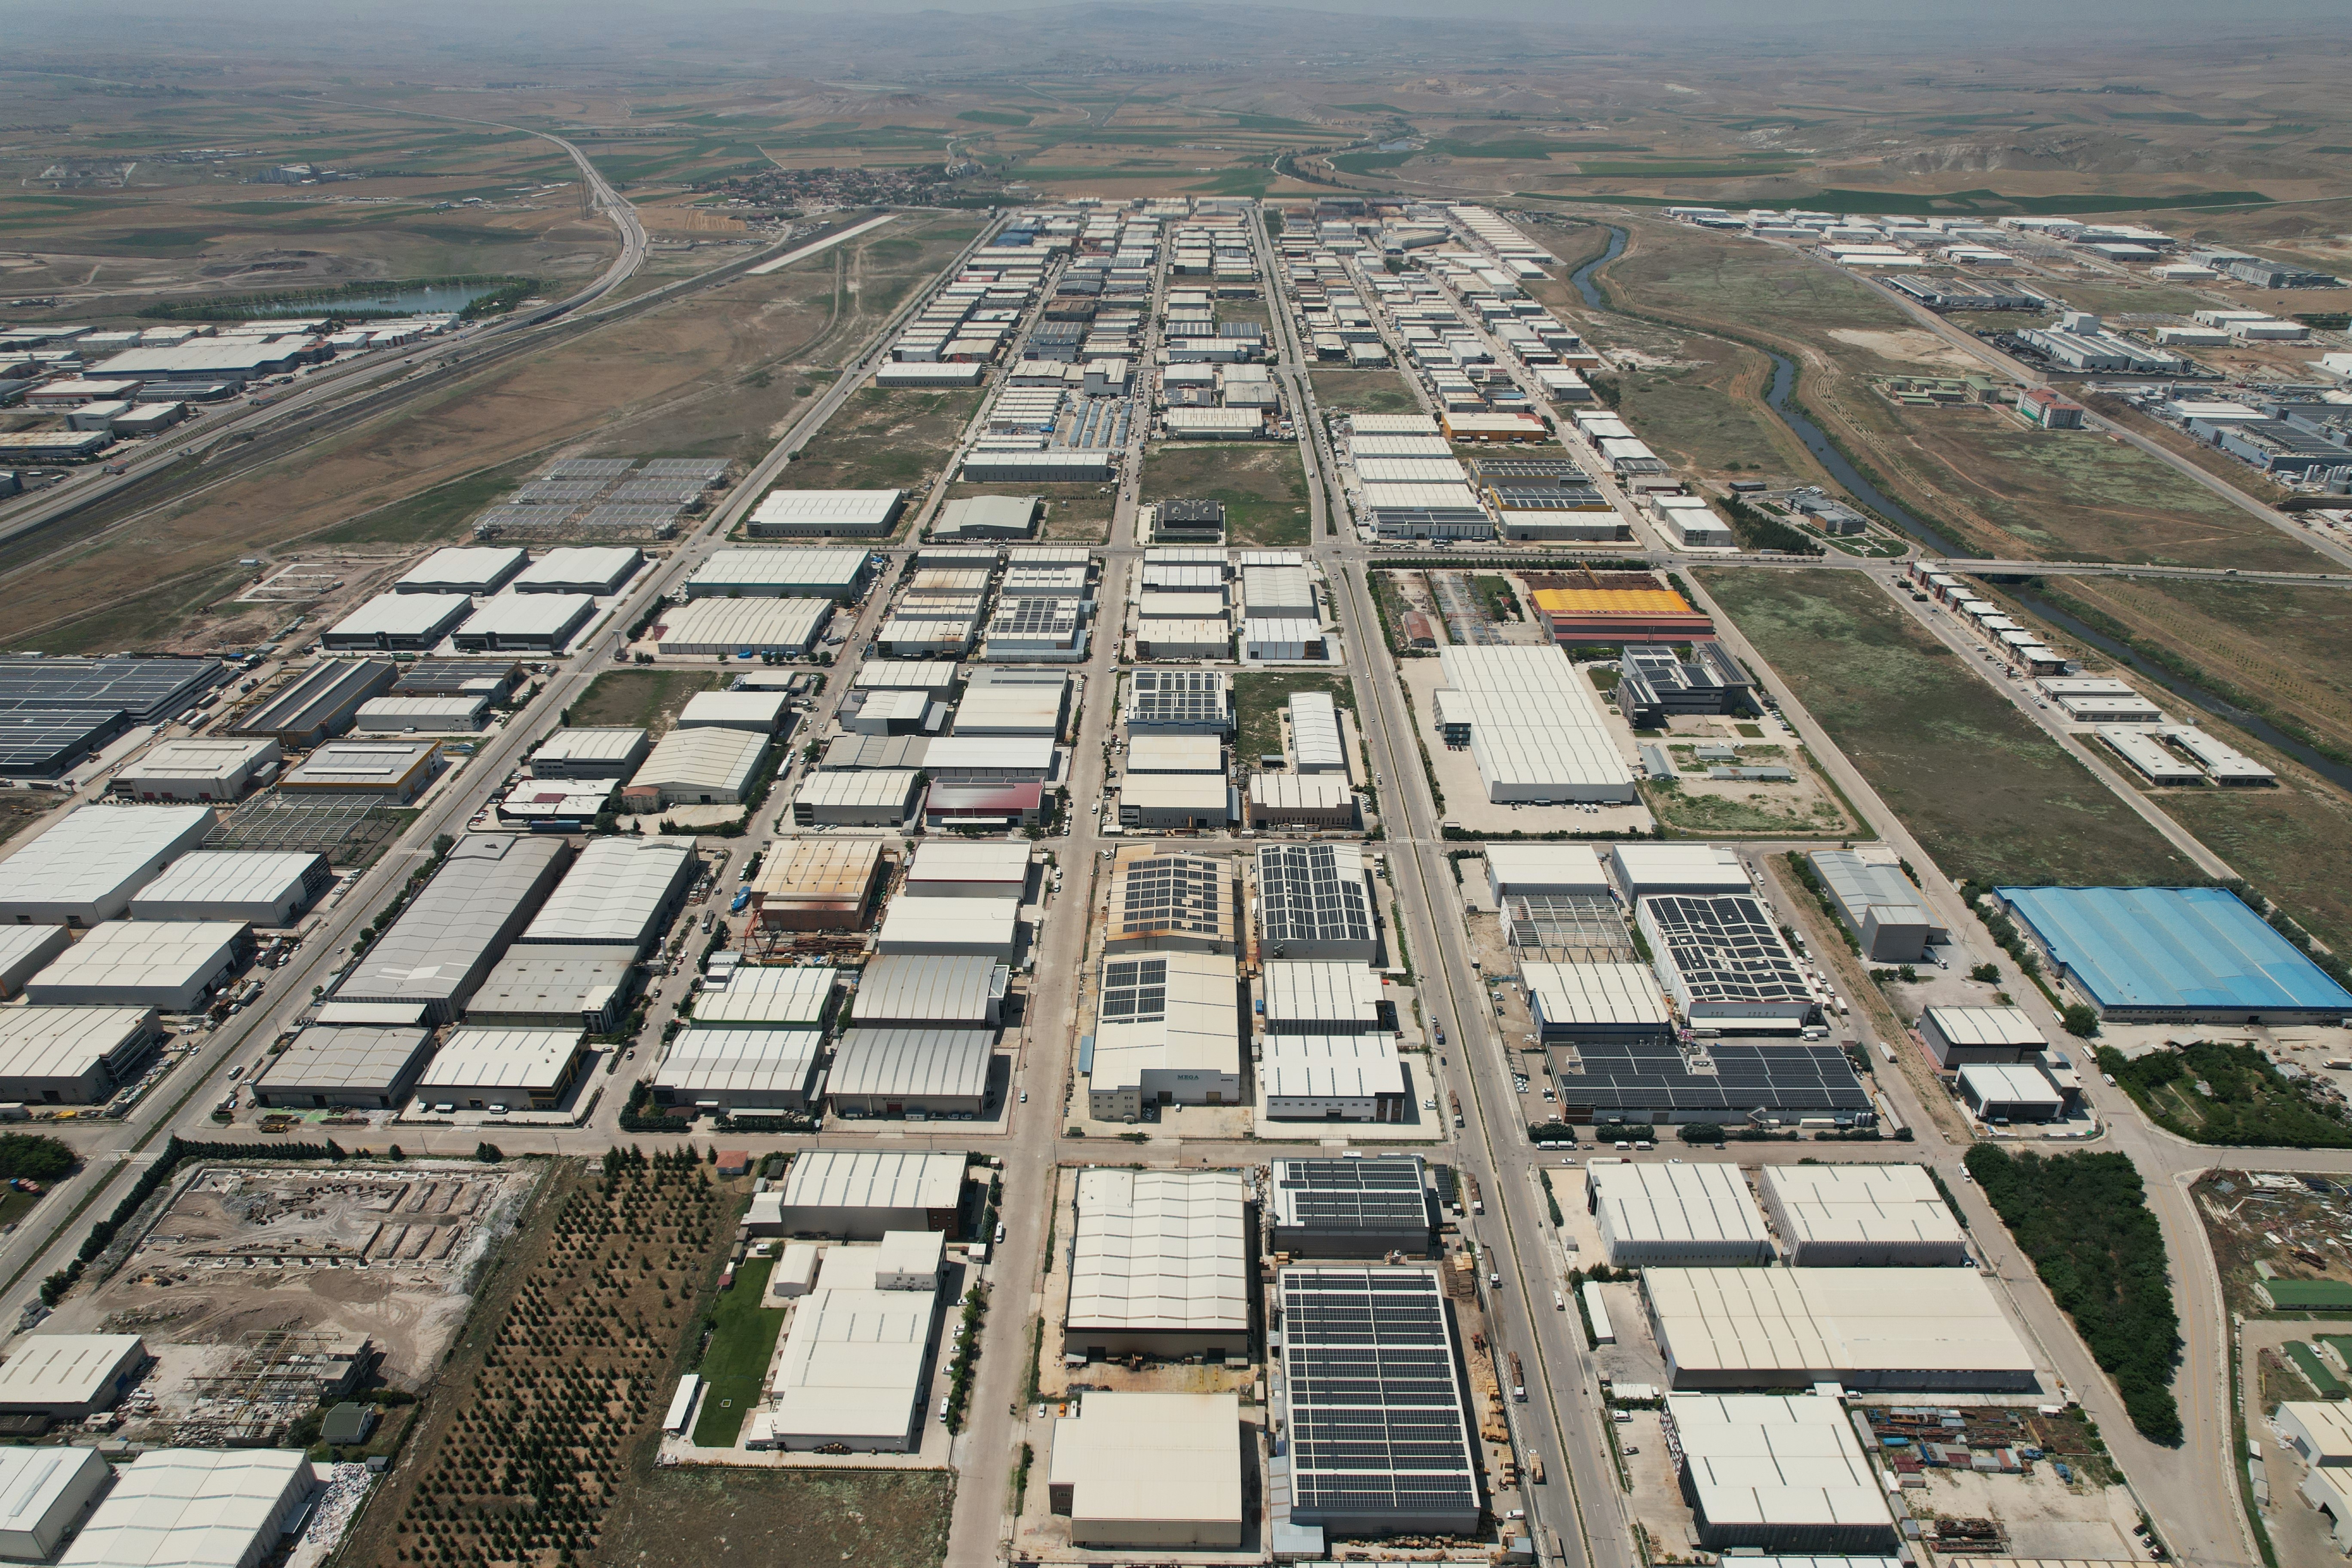 Birds eye view of an organized industrial zone.